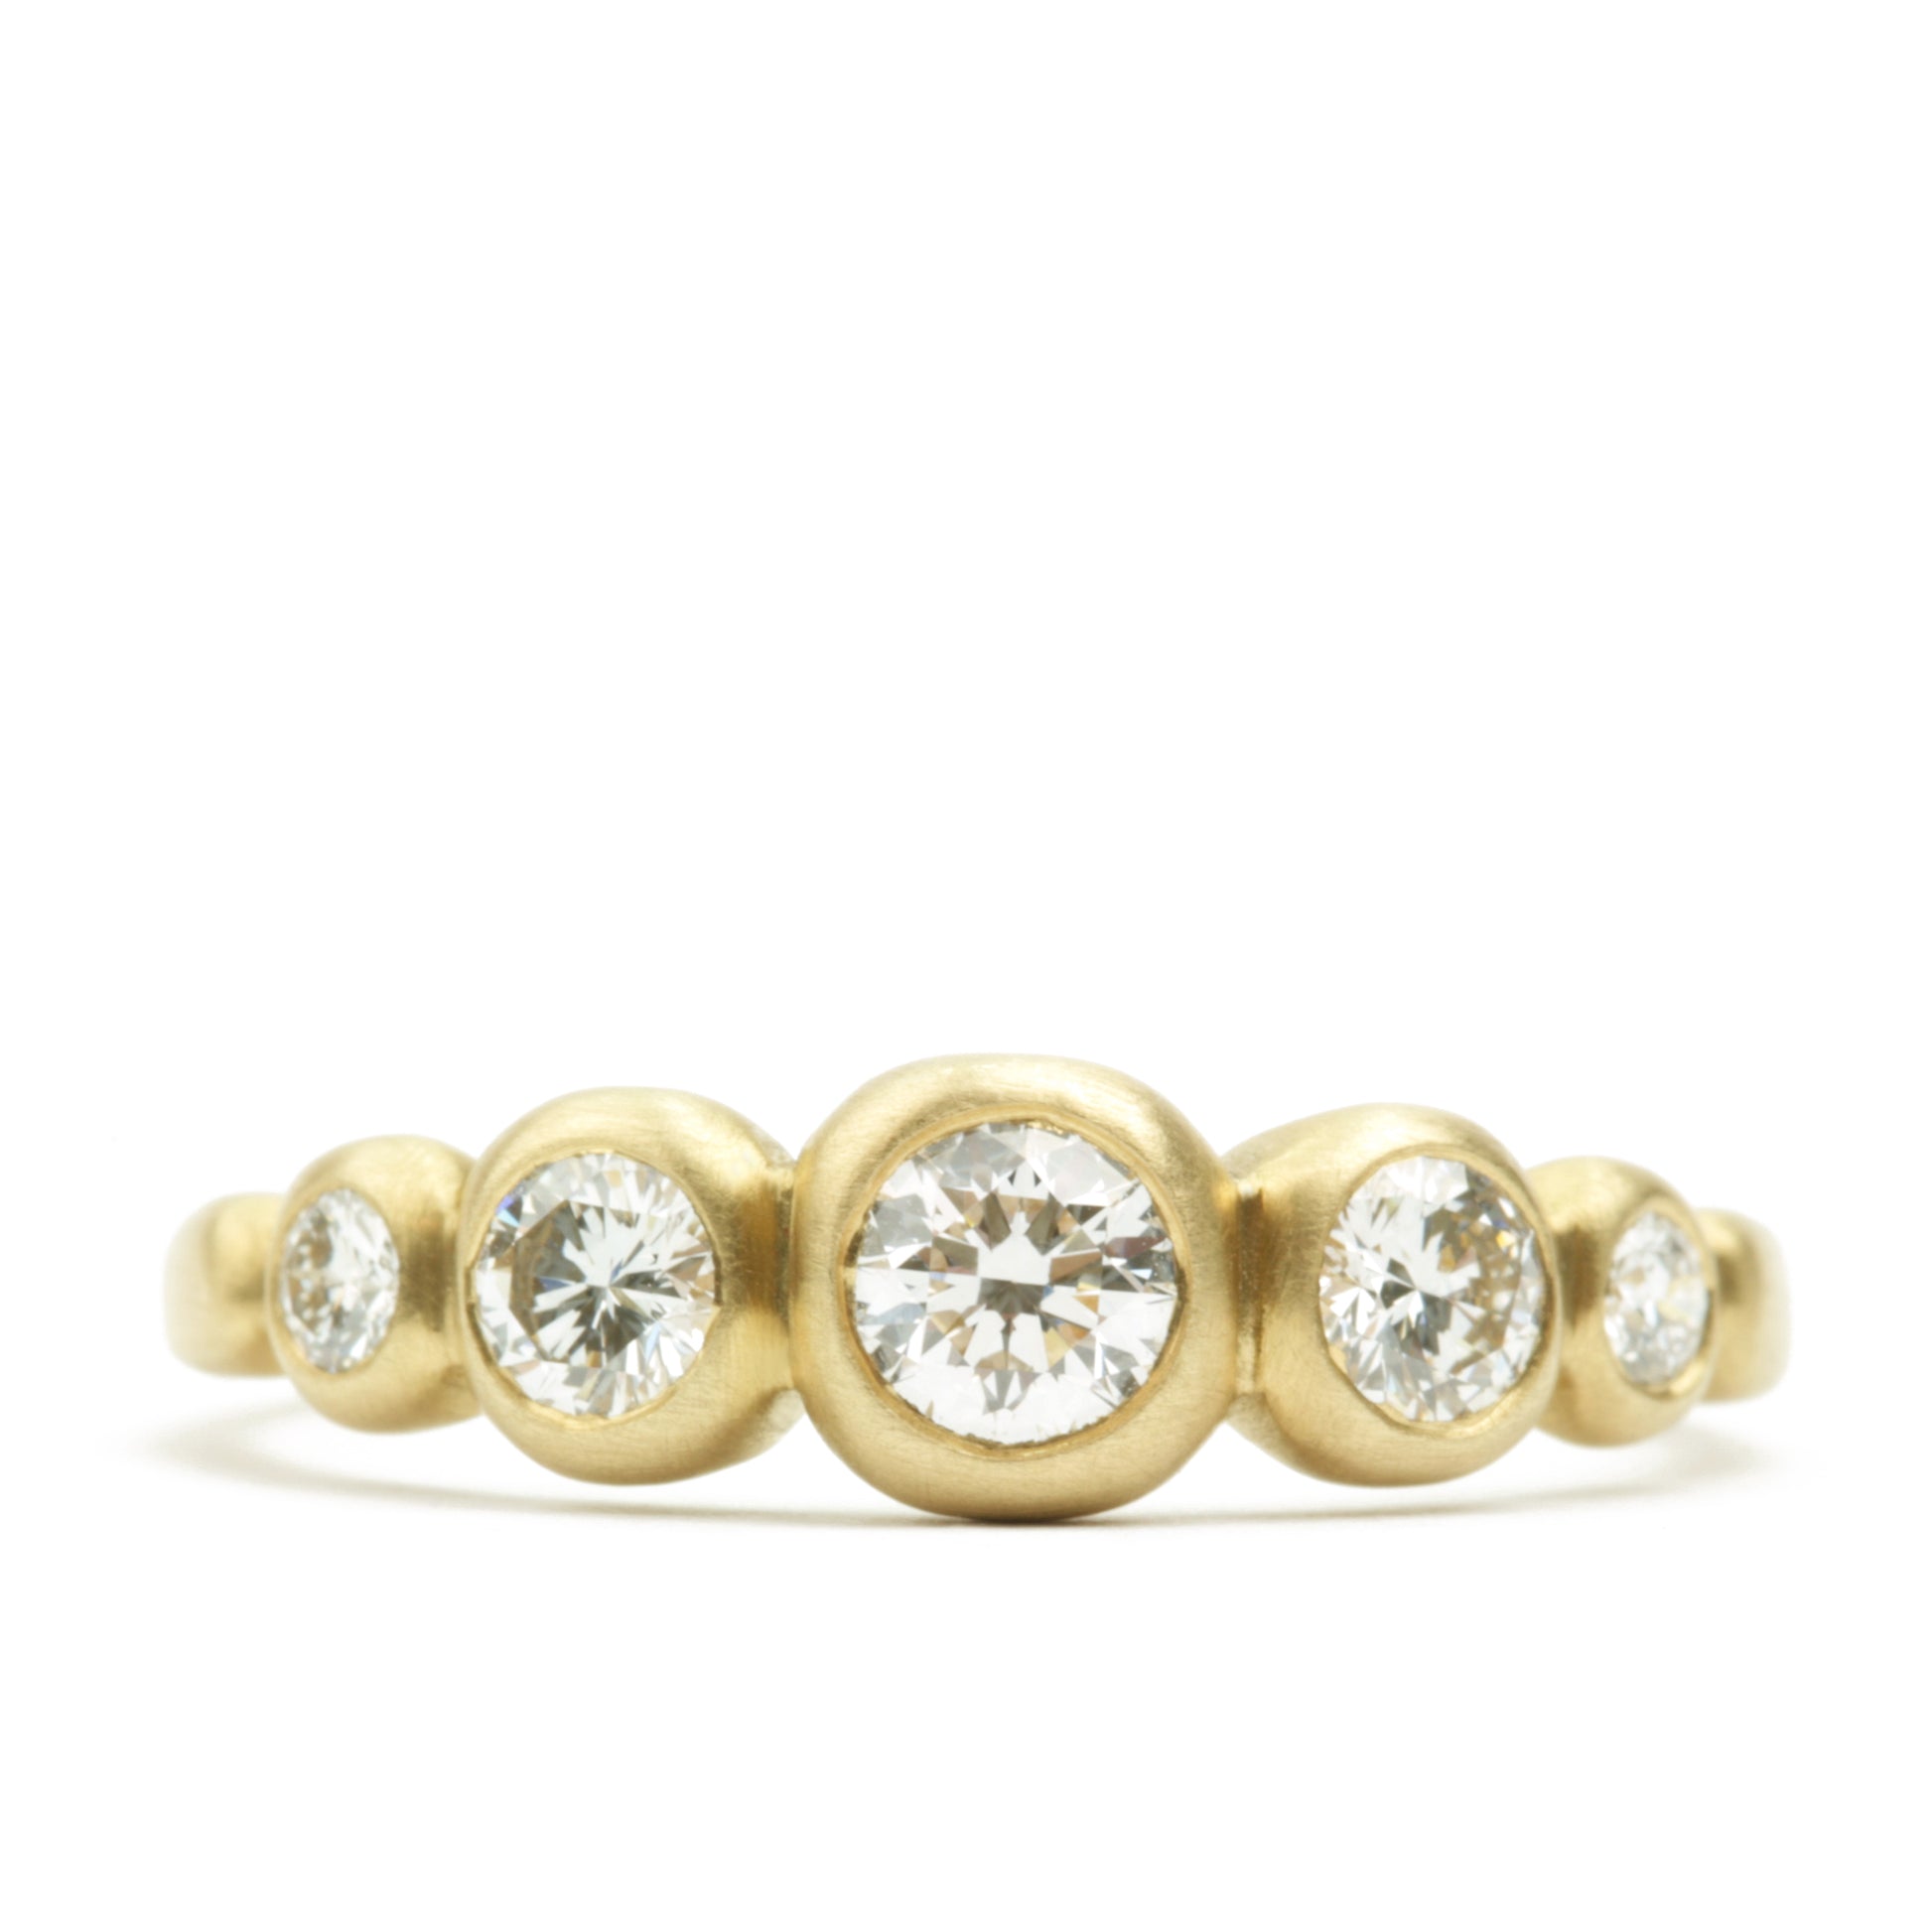 Kima Ring with diamonds, 25 point center stone